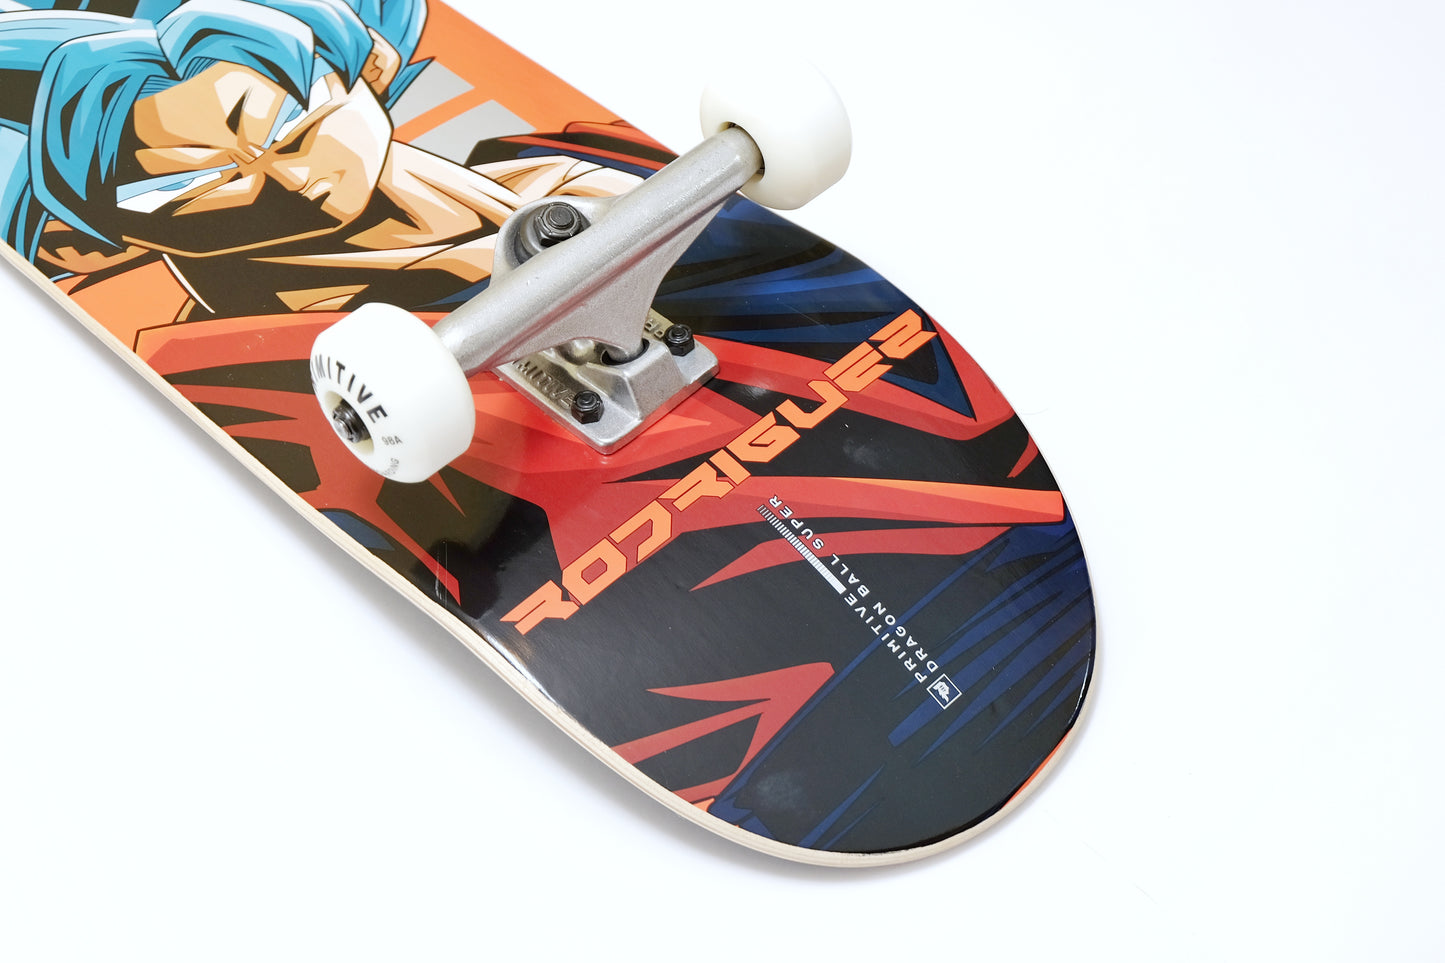 Primitive X DBZ Goku Skateboard